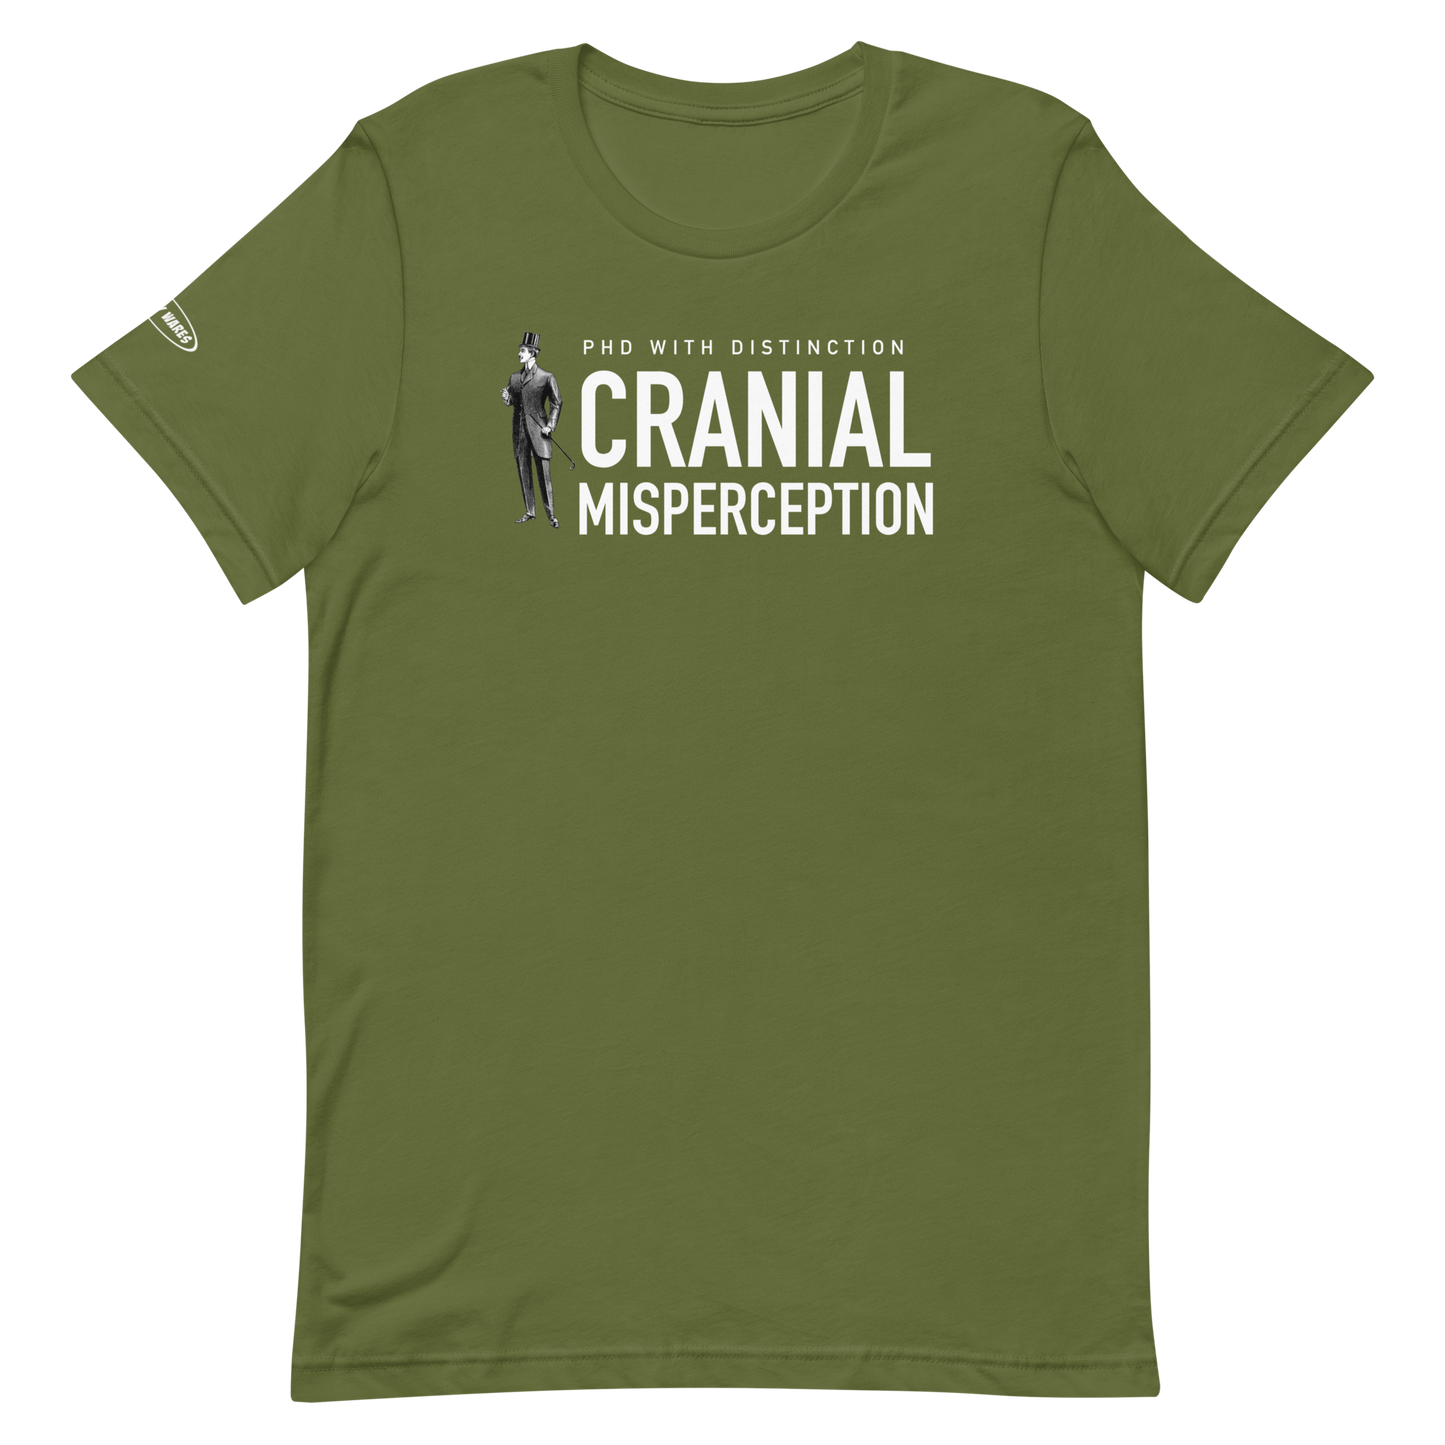 PHD With Distinction - Cranial Misperception - Funny t-shirt